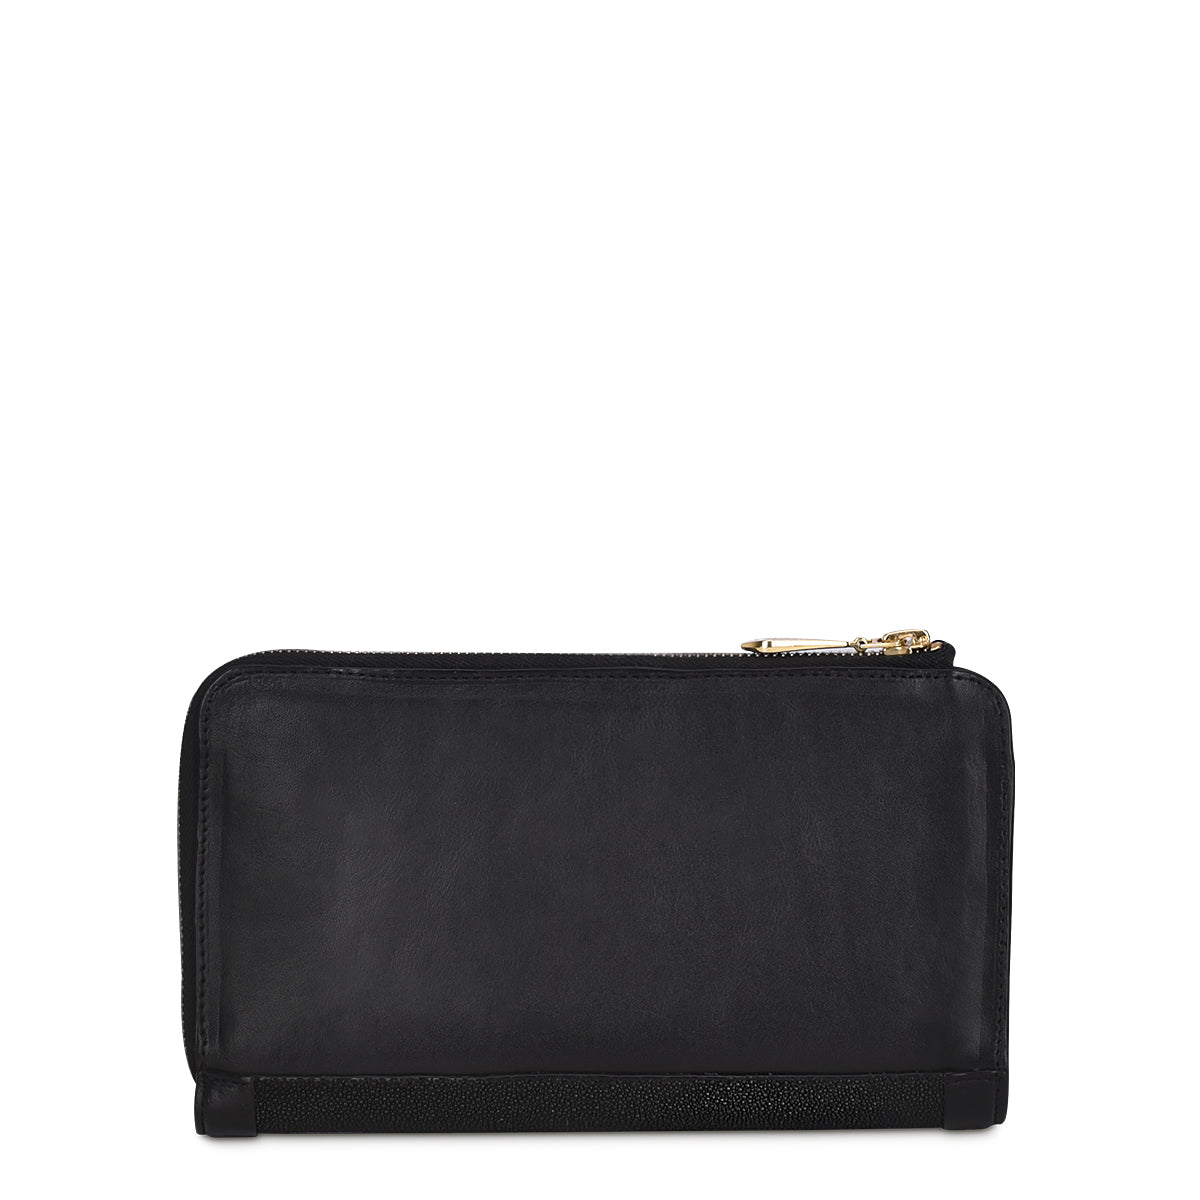 Black leather bifold wallet, stingray leather - BD224MA - Cuadra Shop